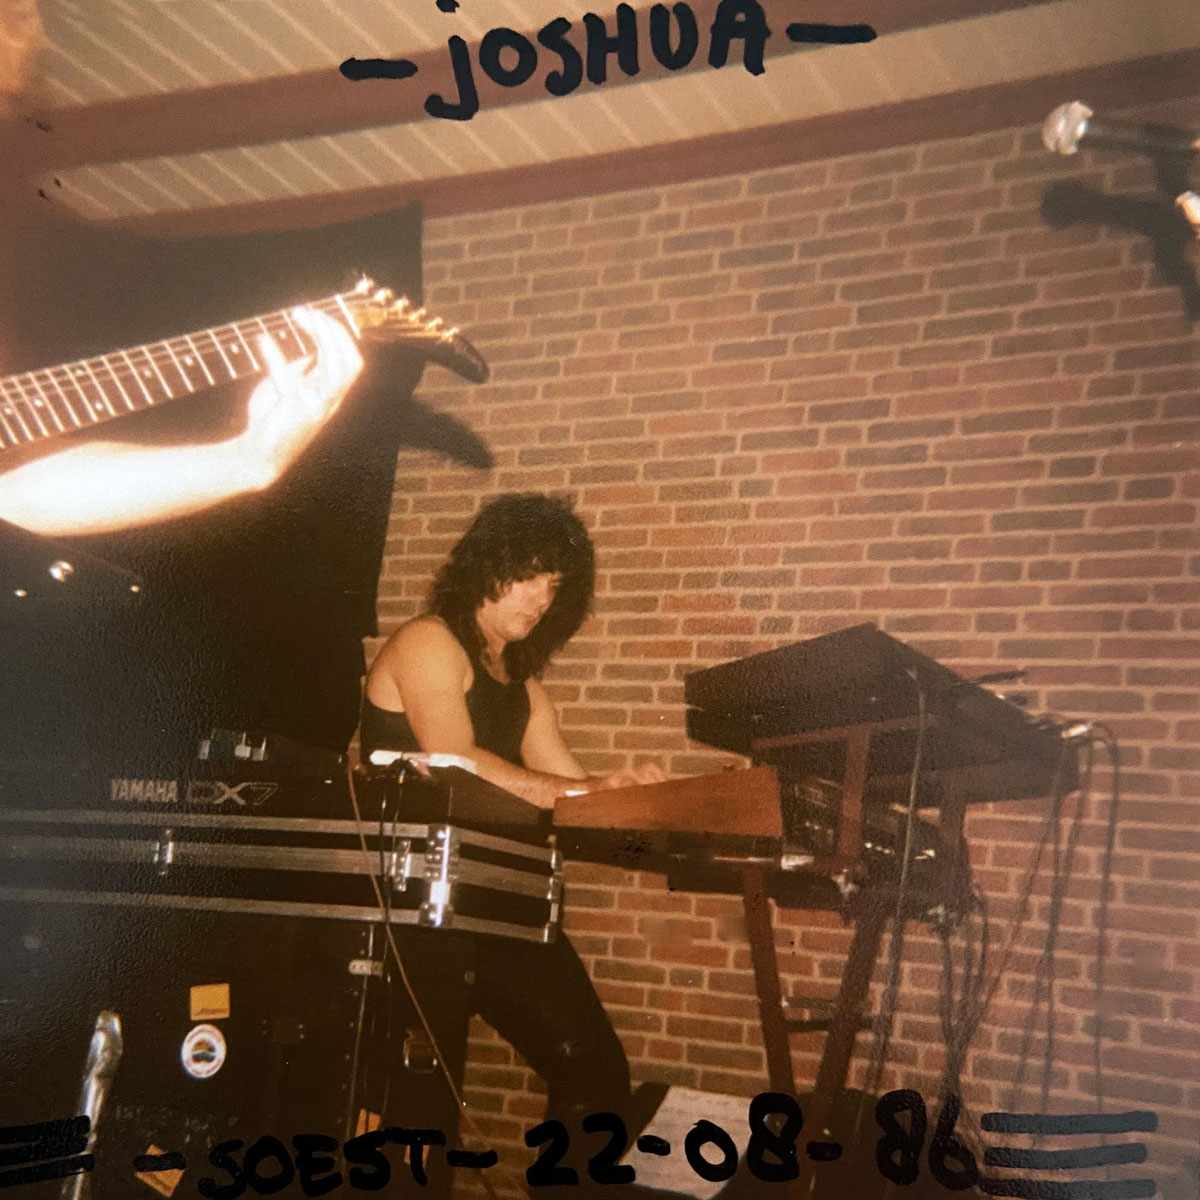 Joshua at Bos En Duin, Soest, Netherlands 1986